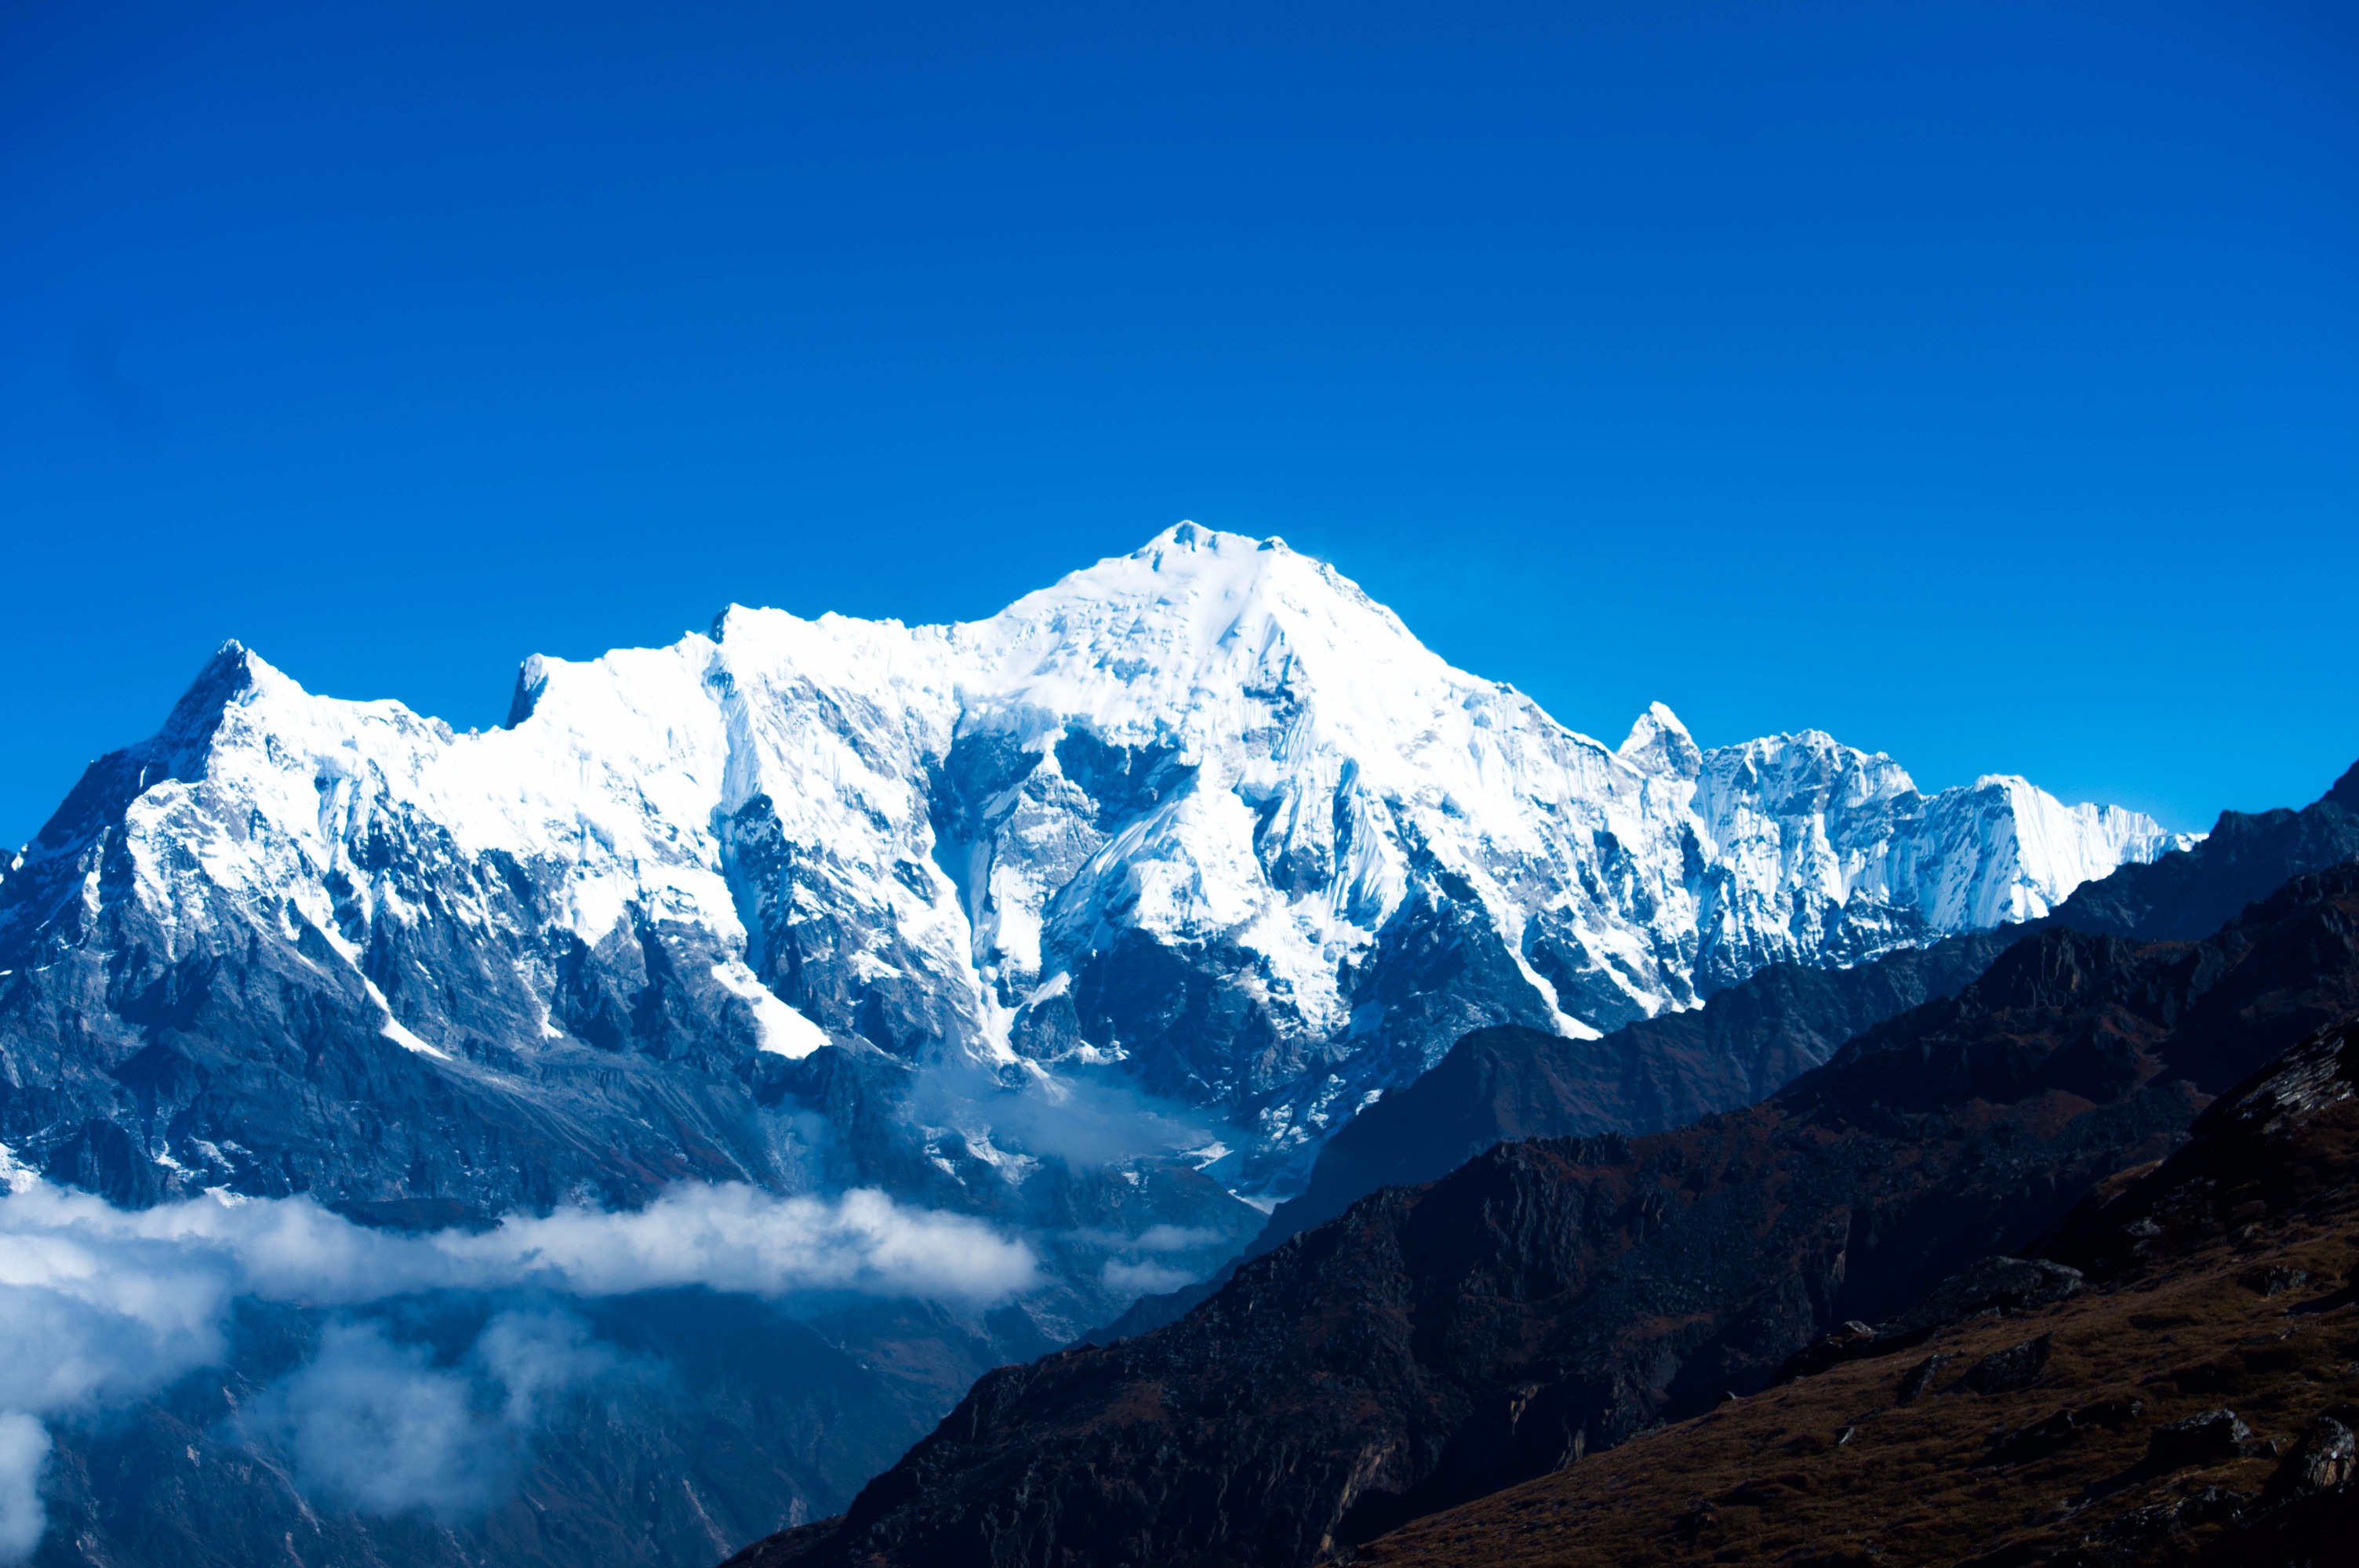 Trekking in Nepal with Mission Eco Trek